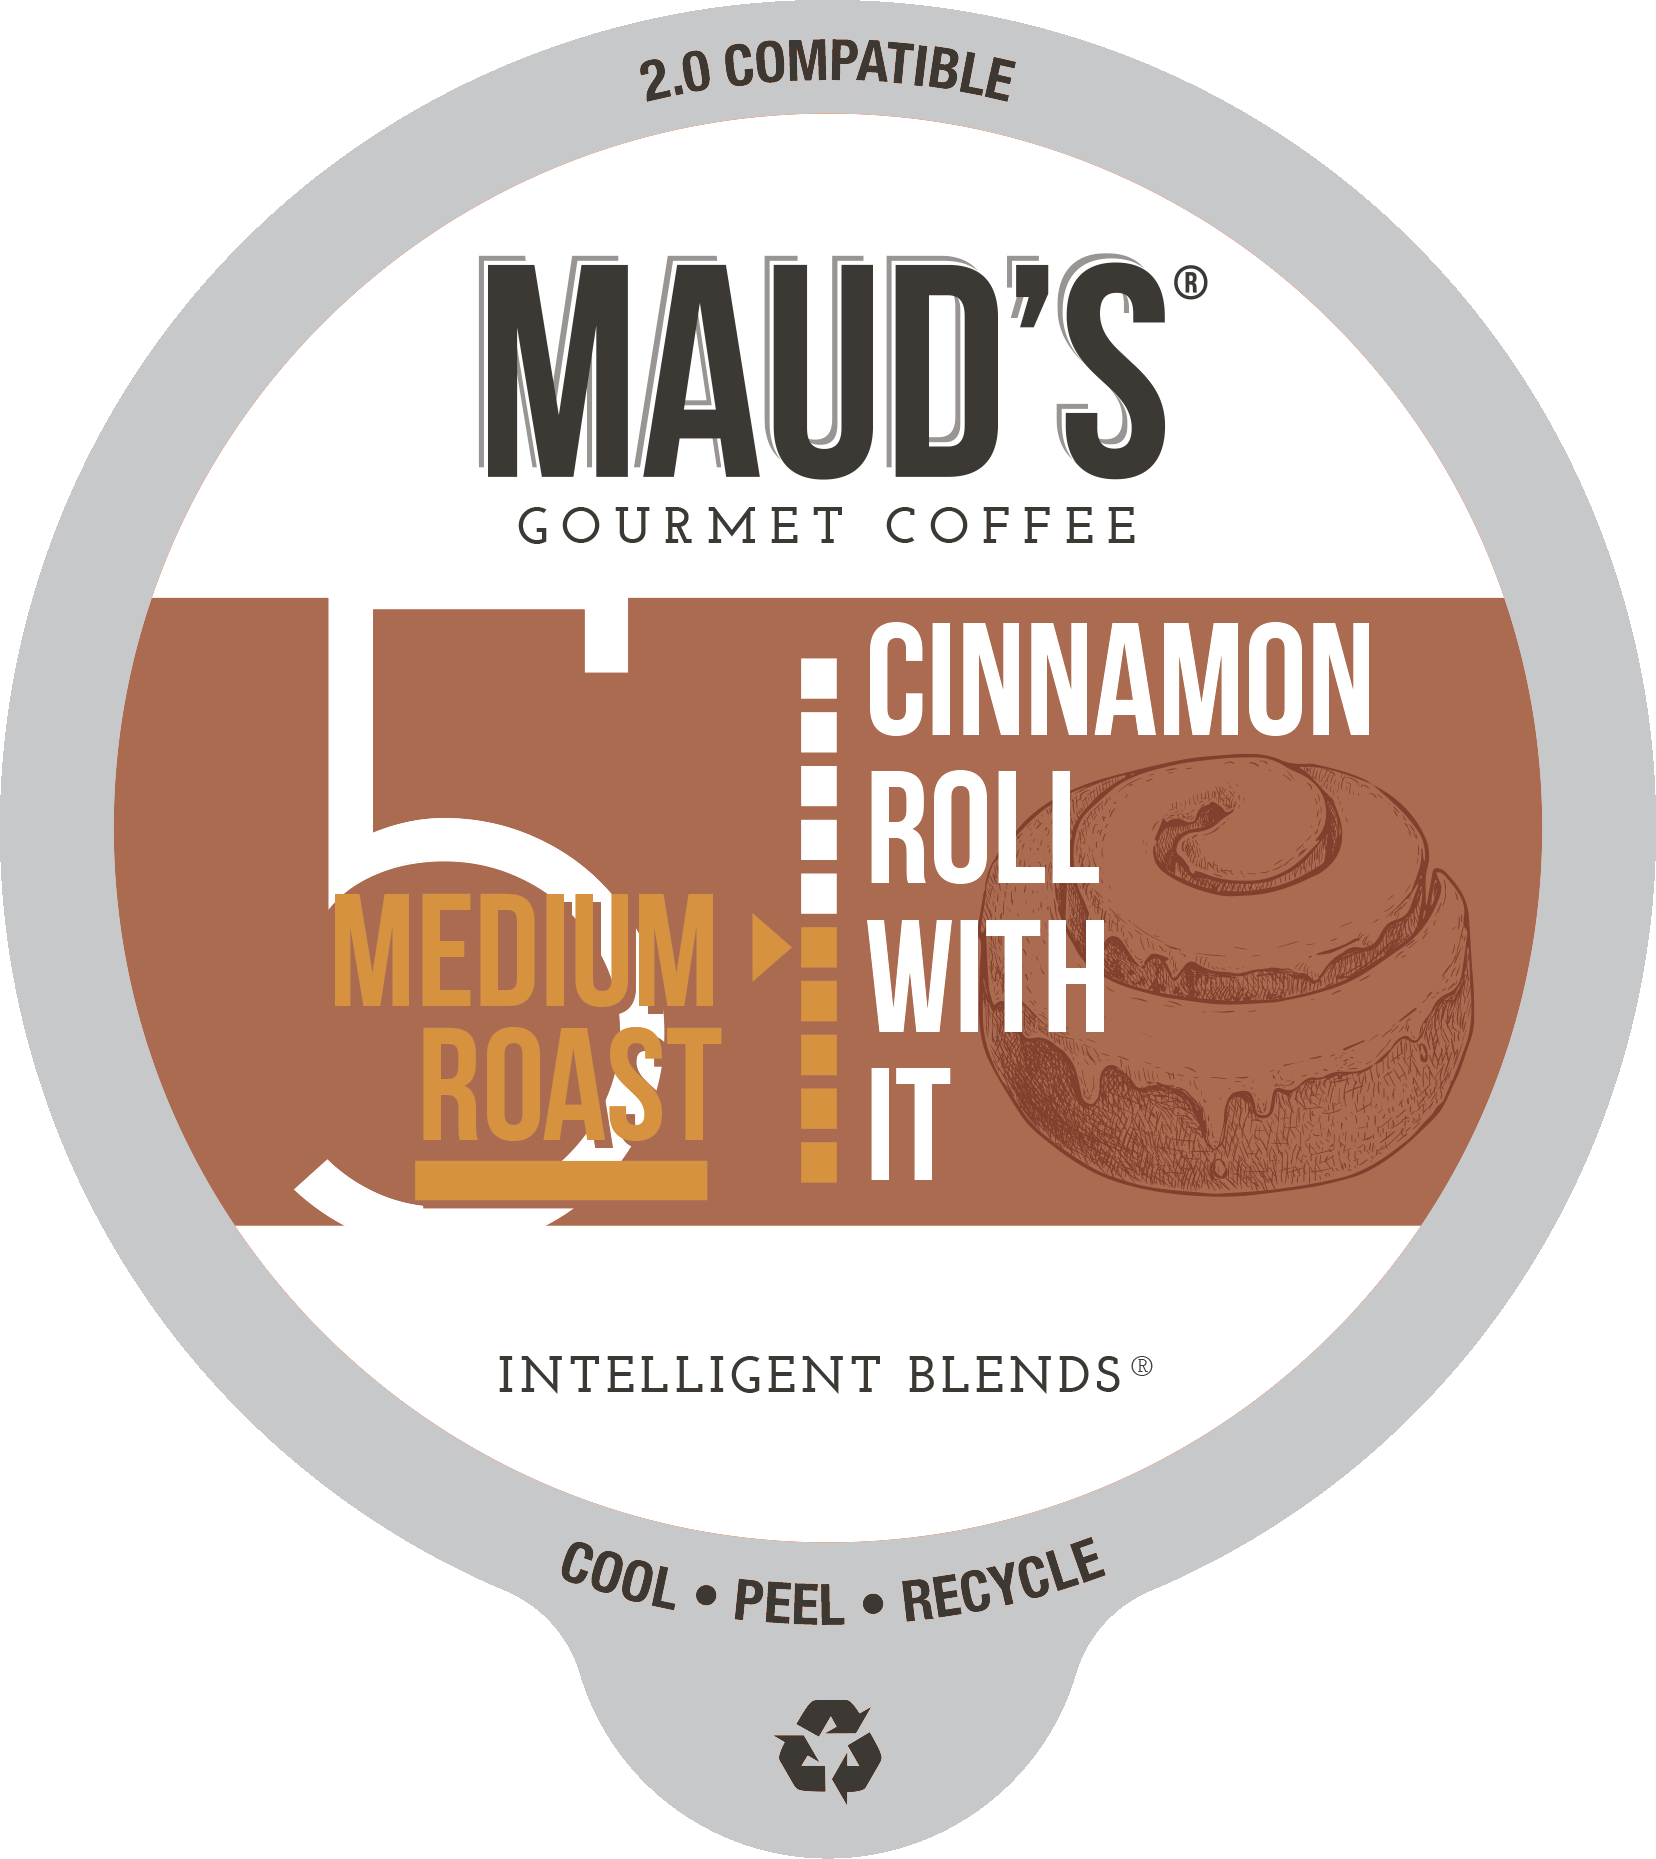 Maud's Cinnamon Roll Flavored Coffee Pods (Cinnamon Roll With It)